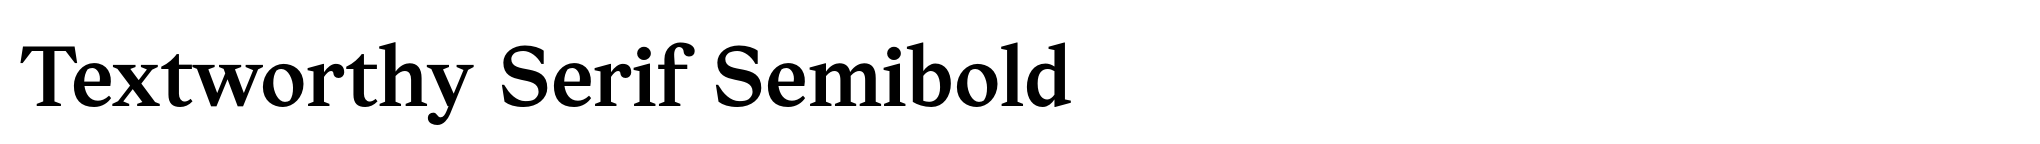 Textworthy Serif Semibold image